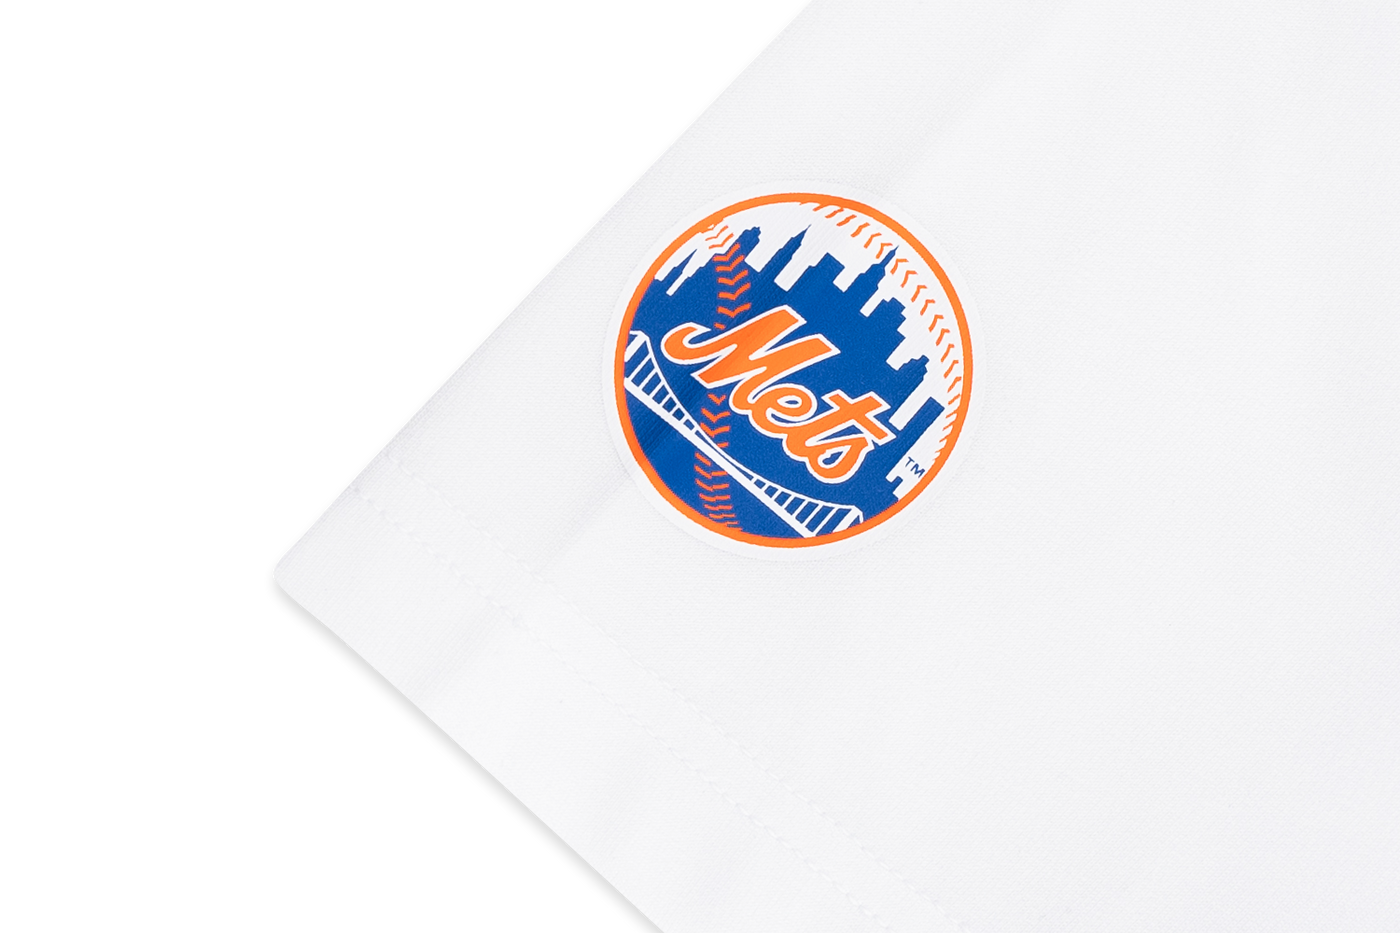 NEW YORK METSPARTY VIBE - MLB DONUT WHITE REGULAR SHORT SLEEVE T-SHIRT